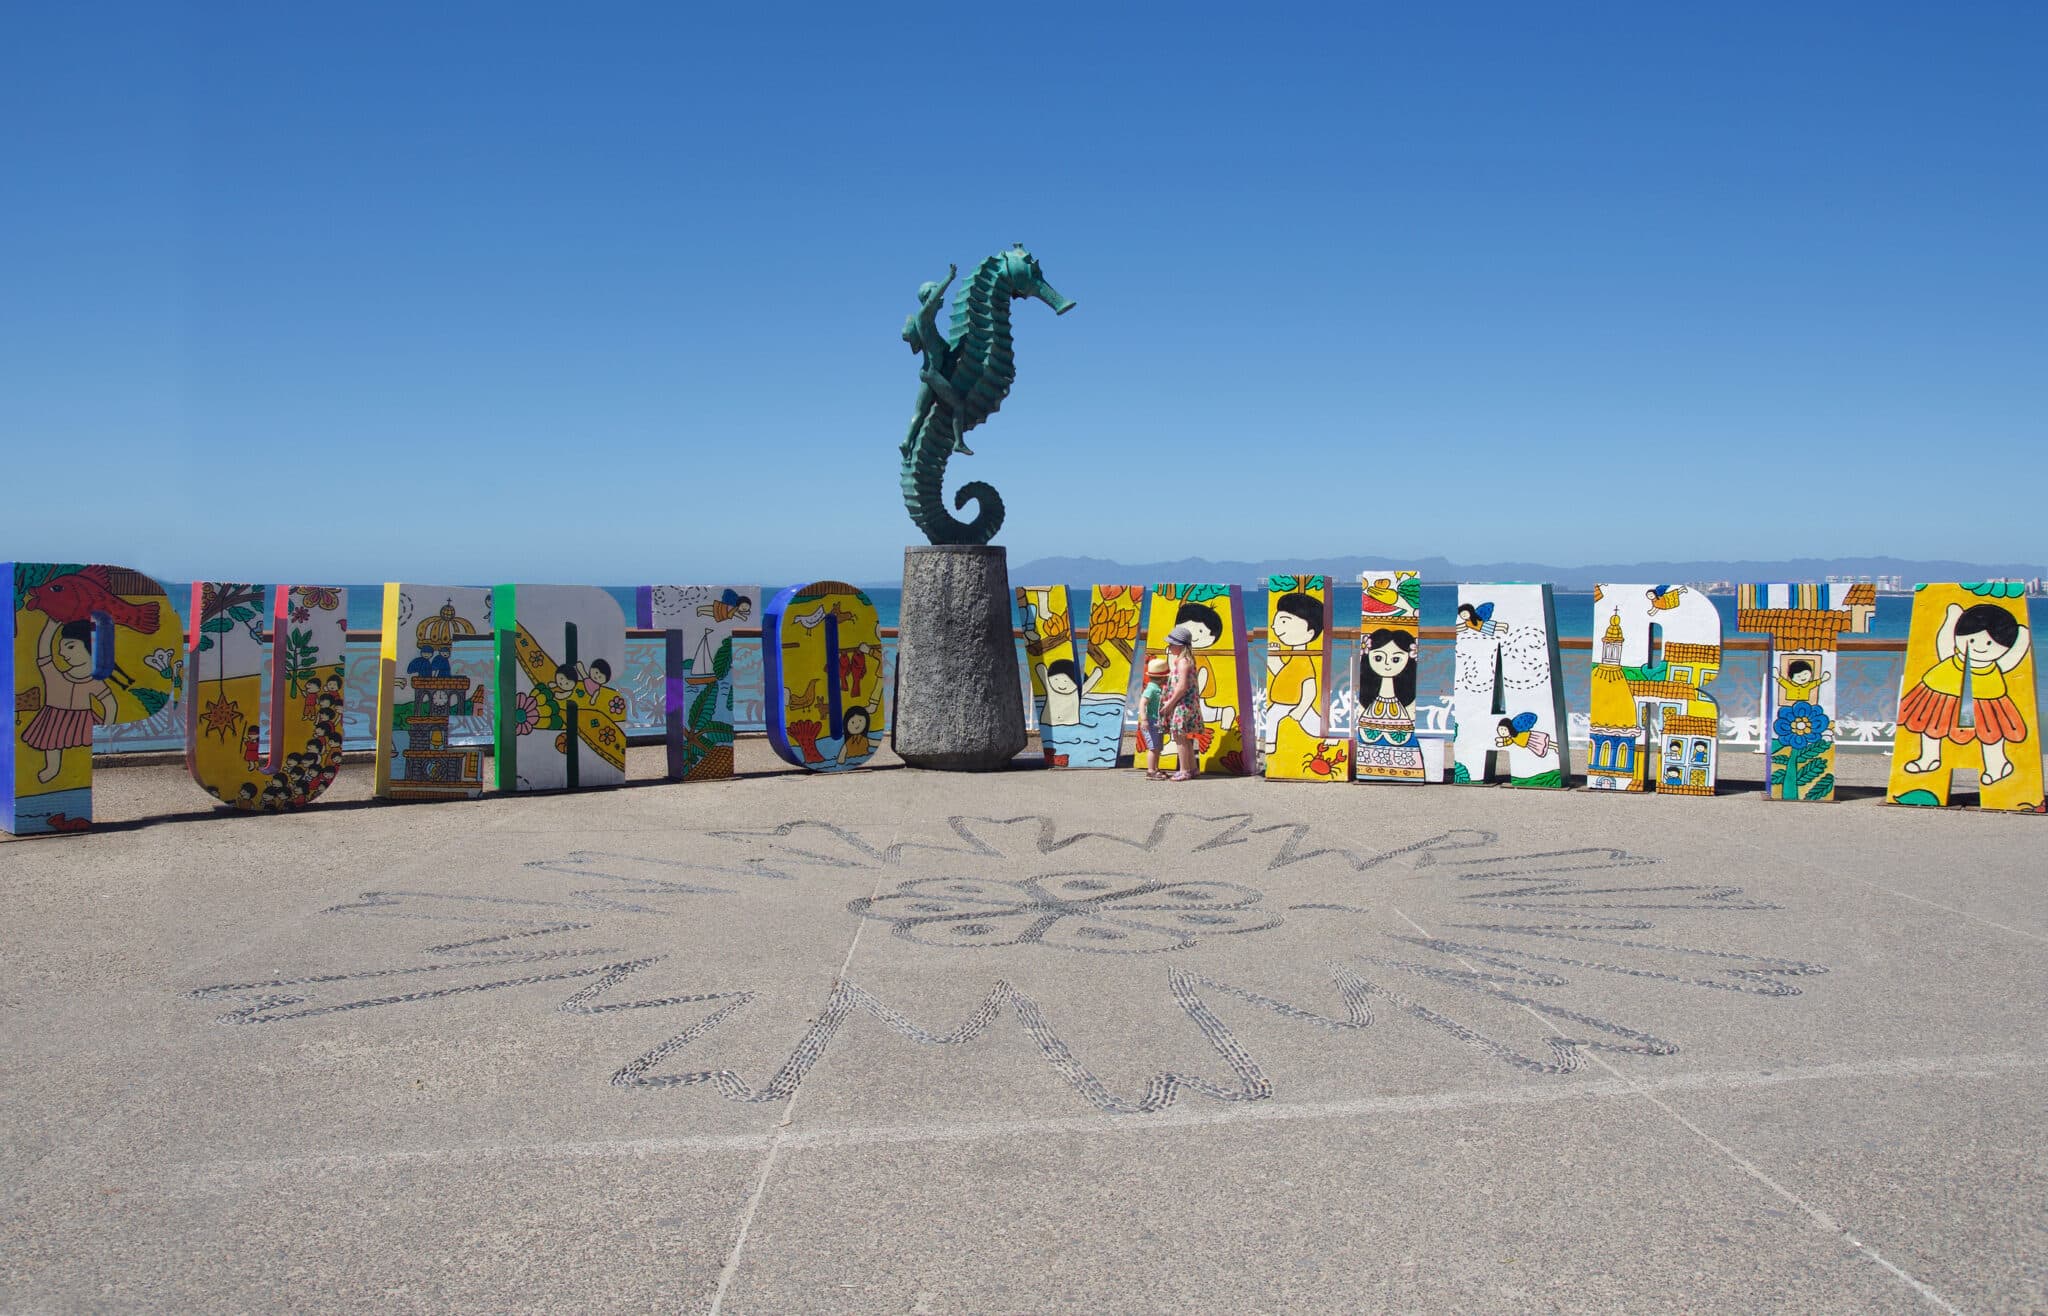 Puerto Vallarta art sculpture on the Malecon boardwalk by Krystal International Vacation Club